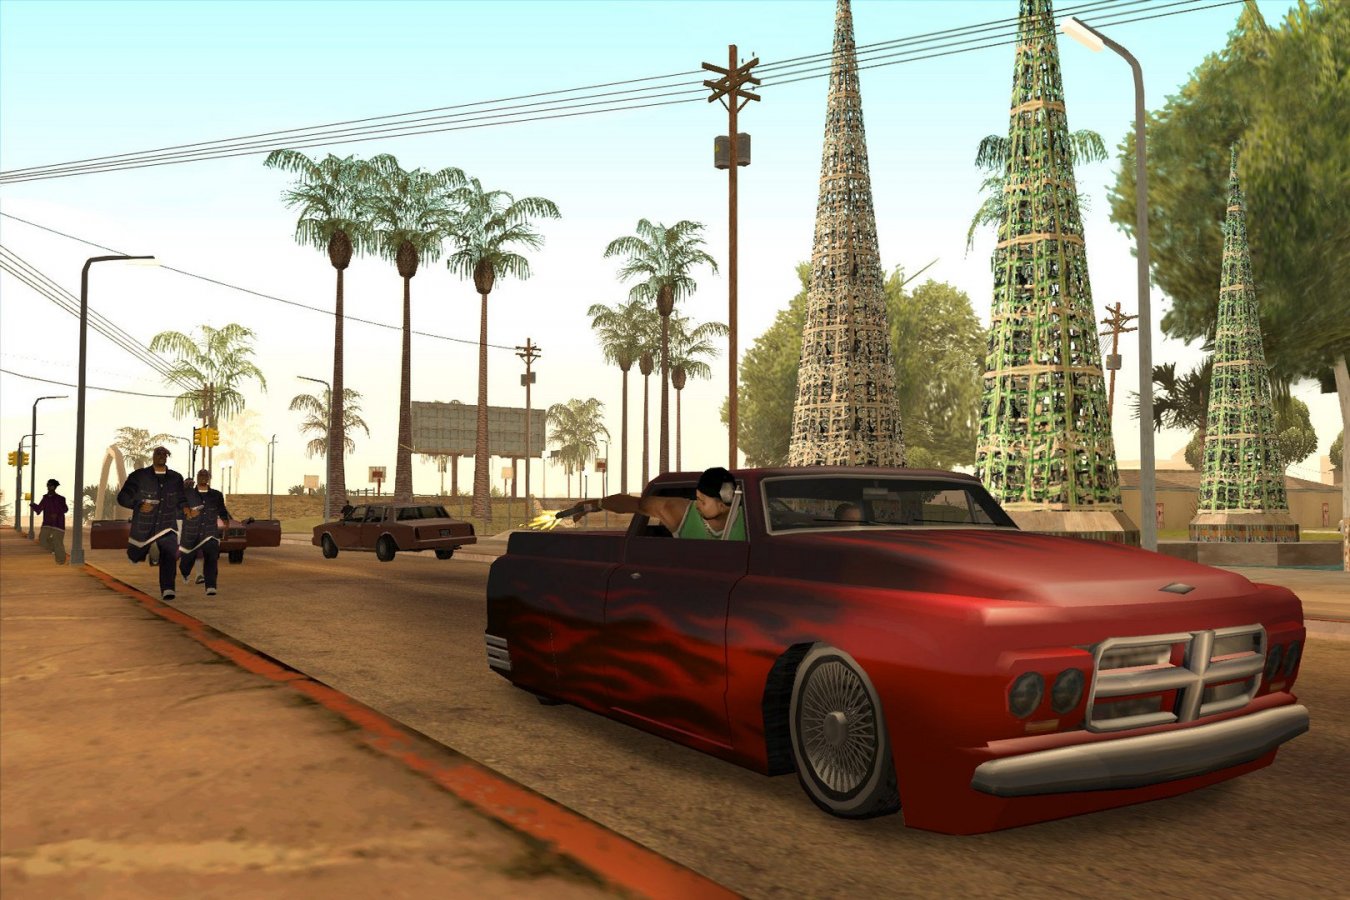 Grand Theft auto: San Andreas